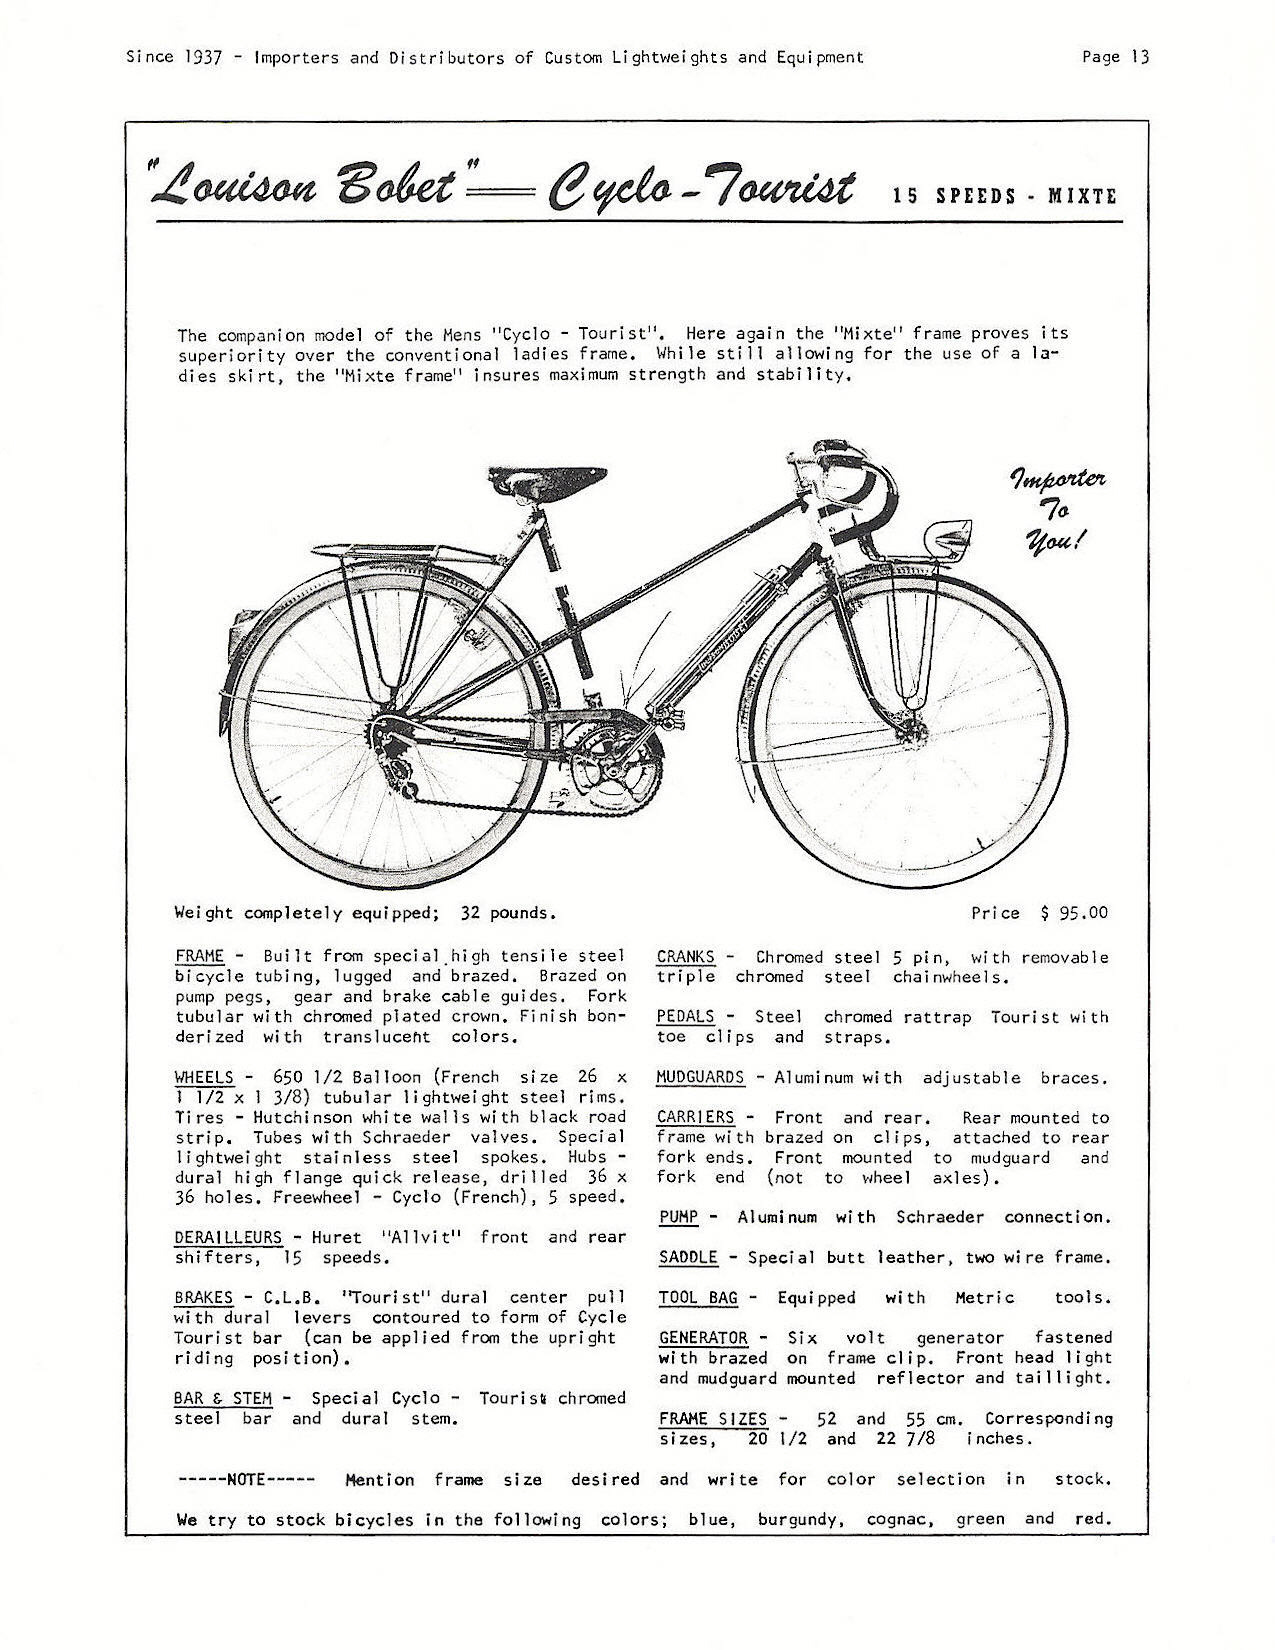 Cyclo-Pedia catalog (1966)